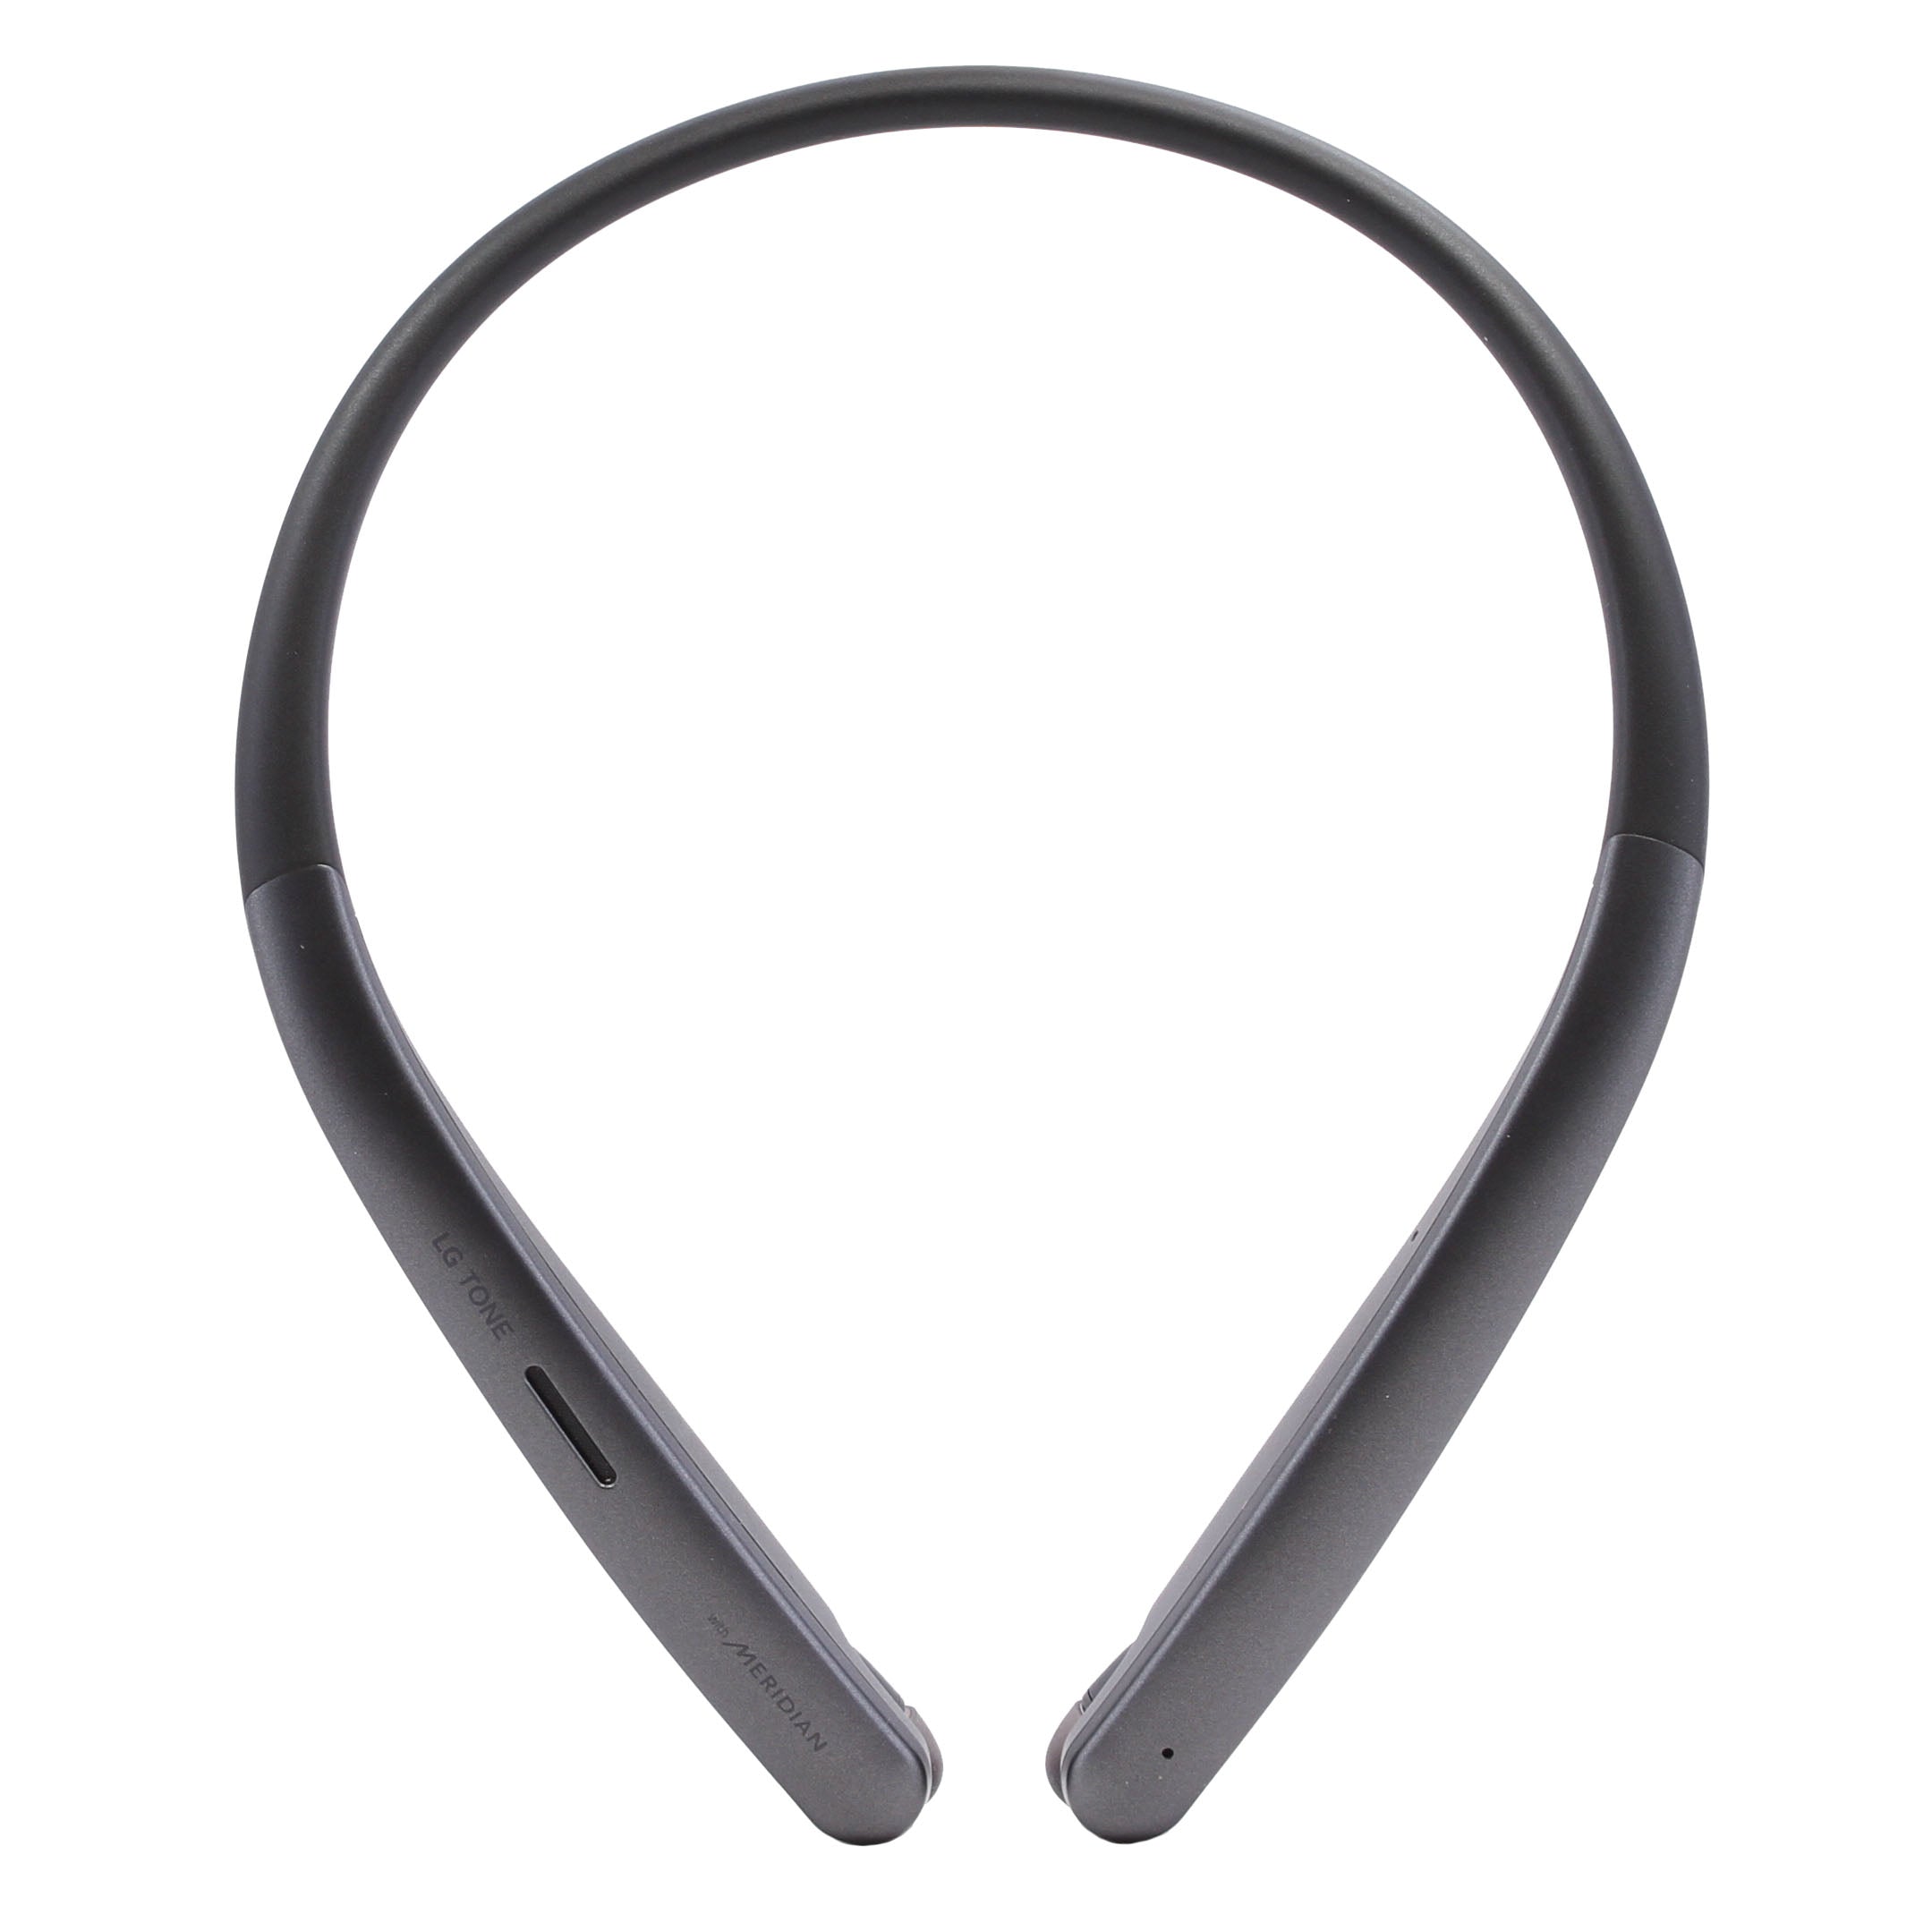 LG TONE Style HBS-SL6S Bluetooth Wireless Stereo Headset - Black (New)